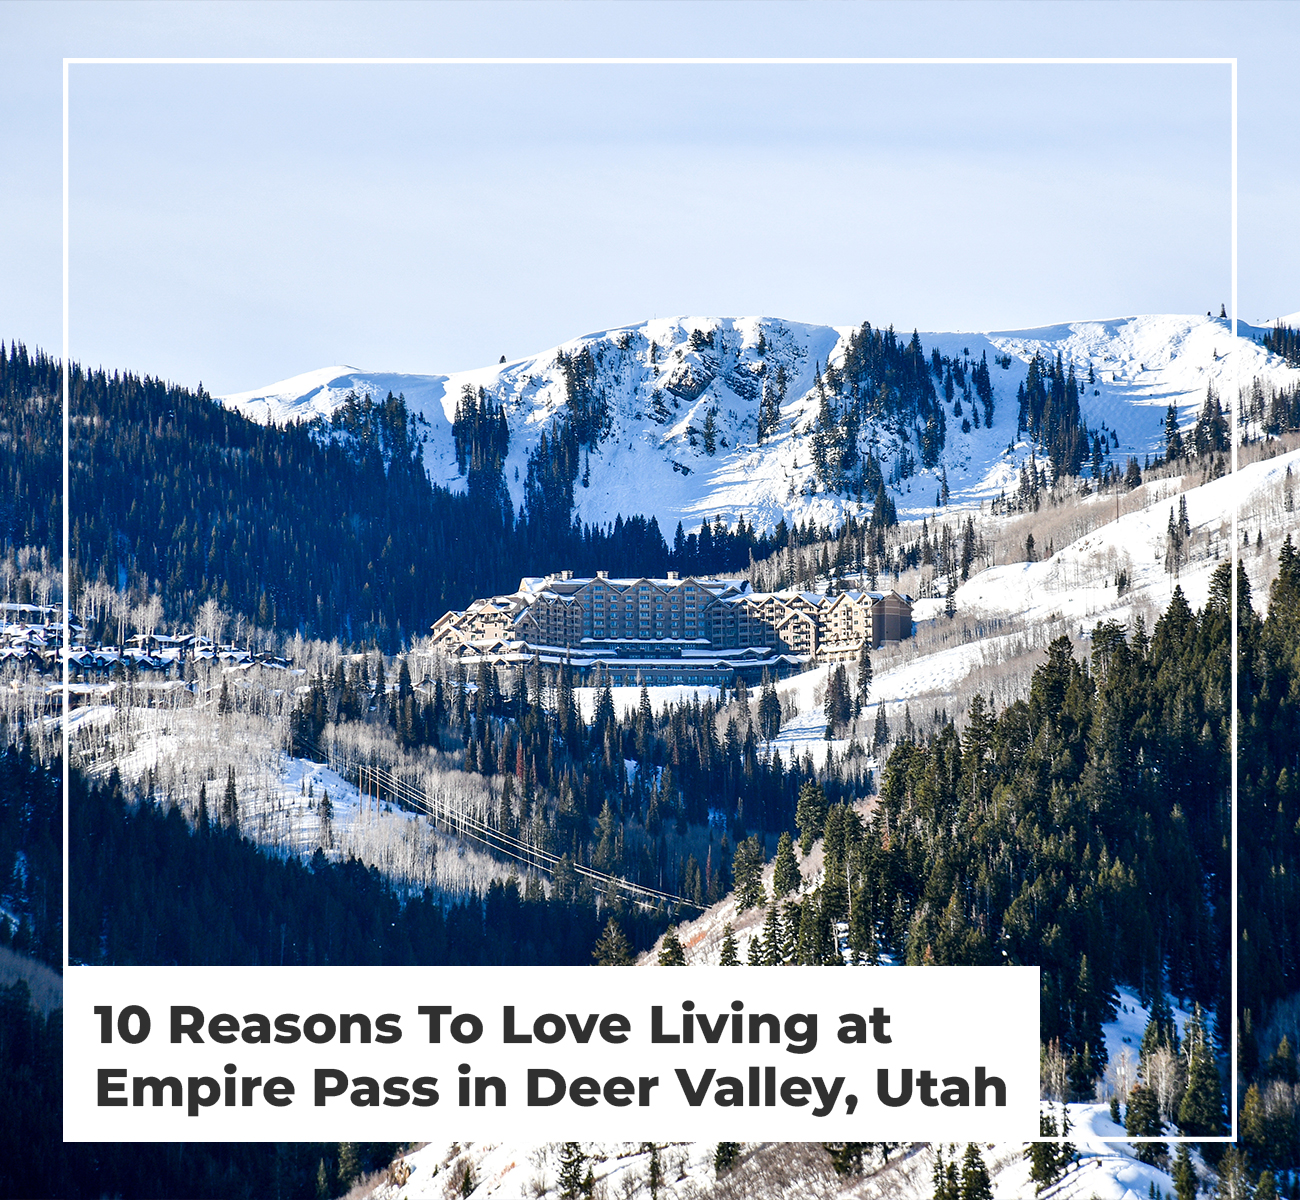 10 Reasons To Love Living at Empire Pass in Deer Valley, Utah